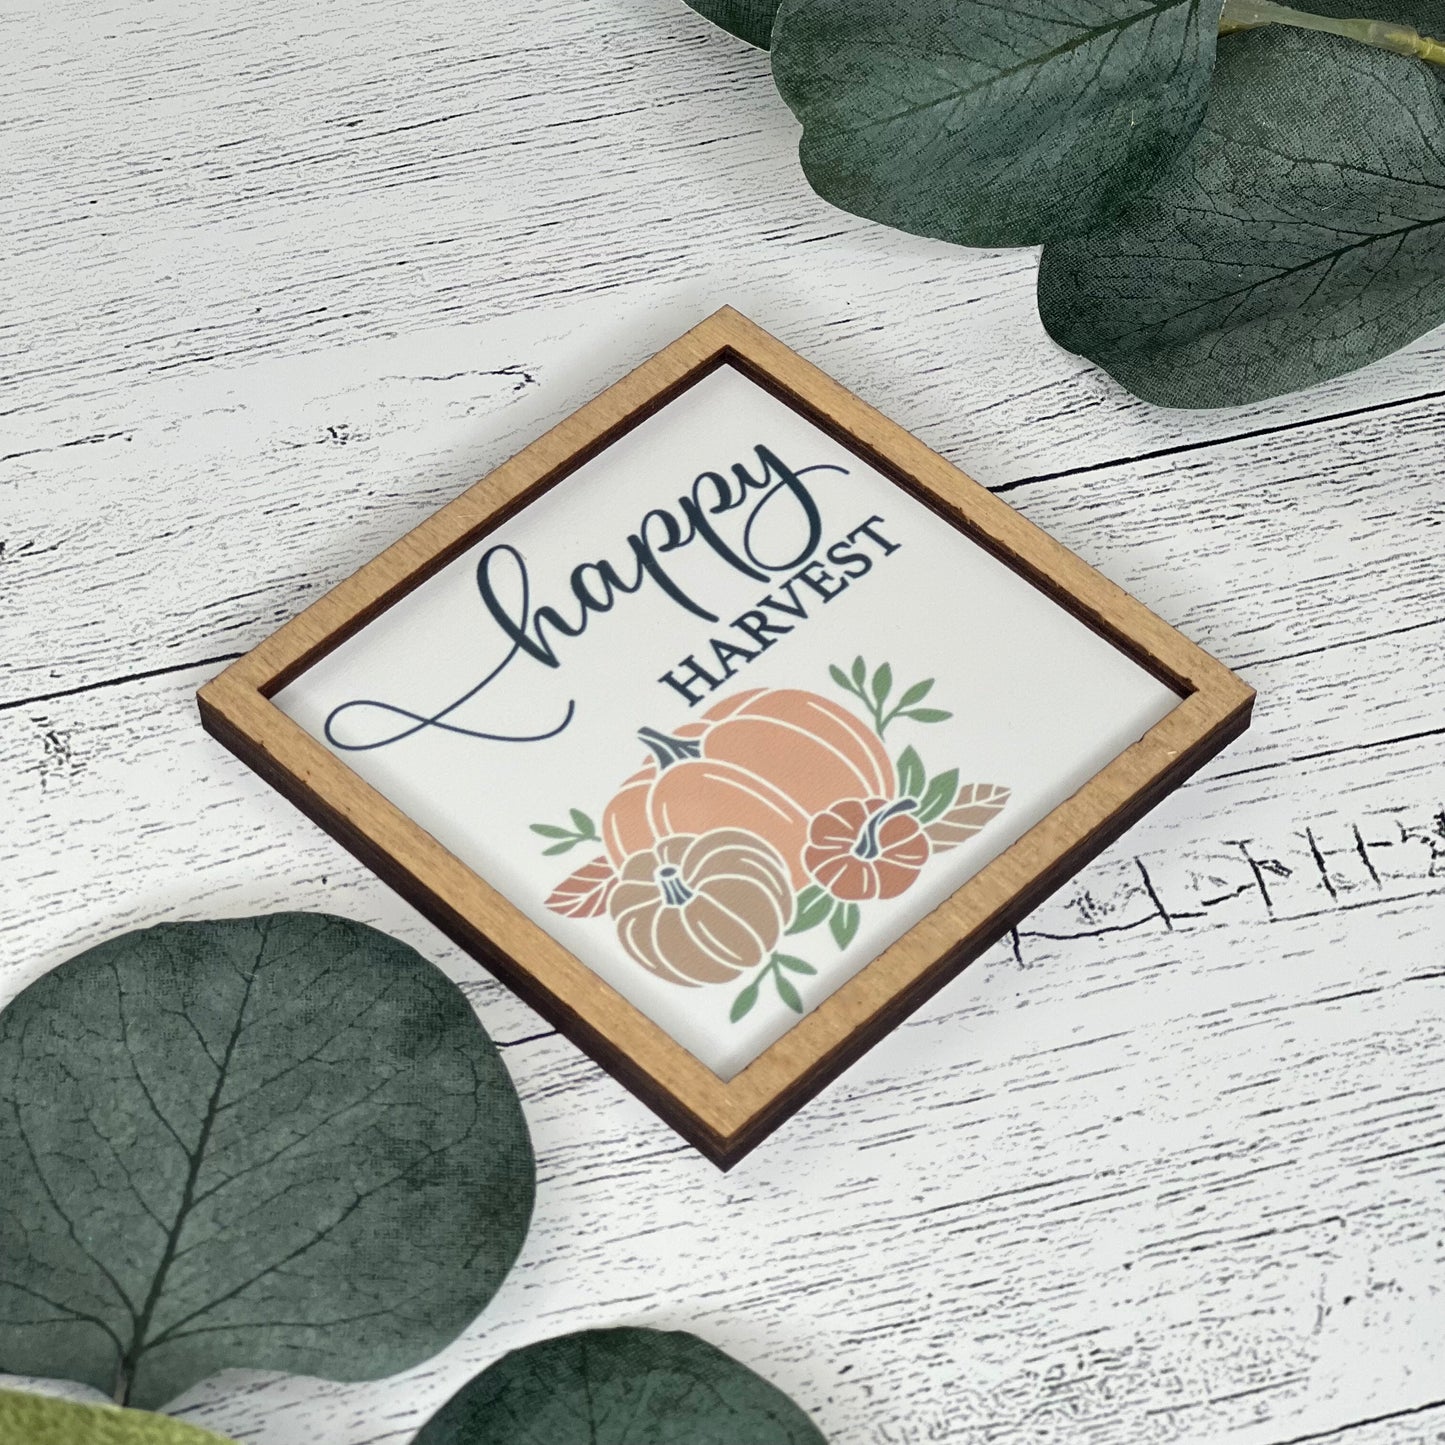 Mini Framed Fall Sign | Happy Harvest Sign